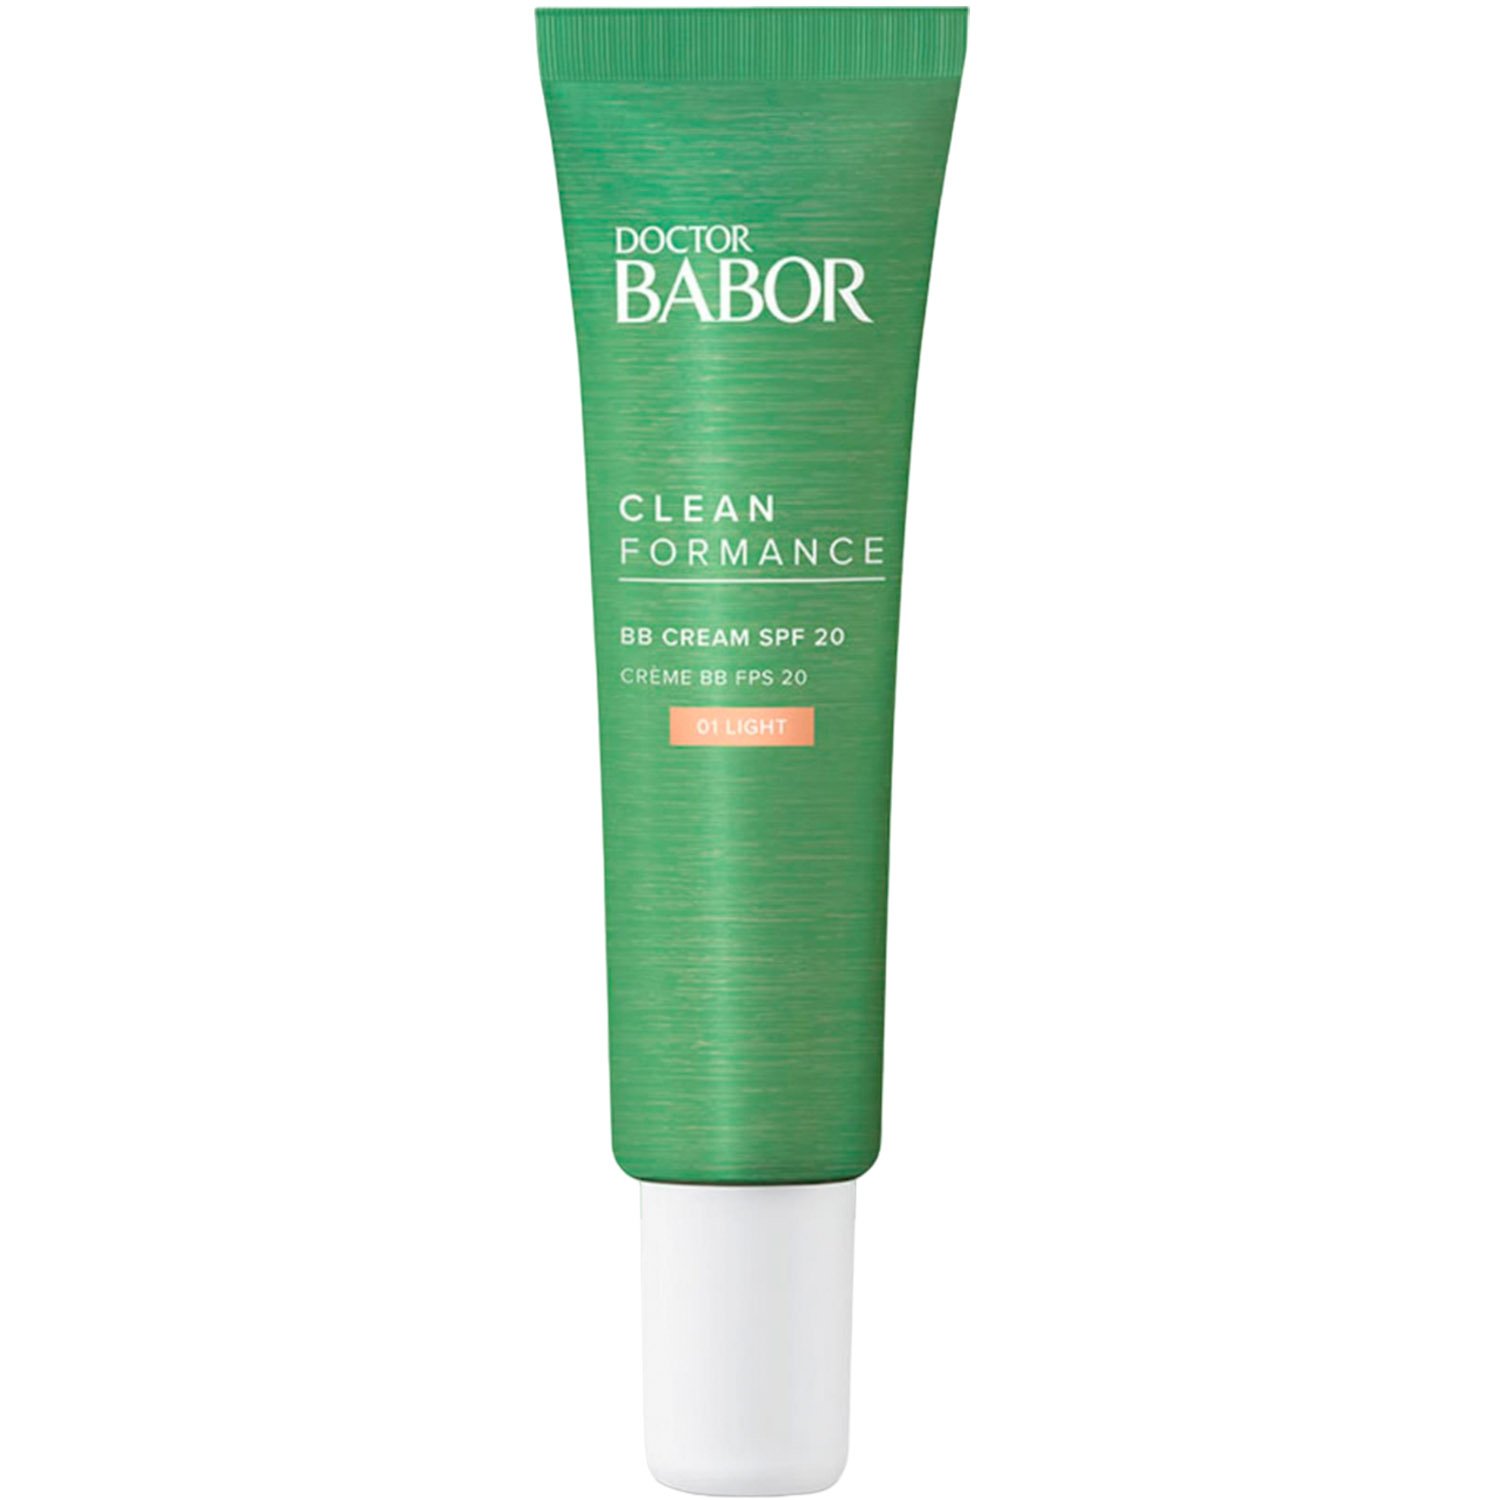 ВВ-крем для лица Babor Doctor Babor Clean Formance BB Cream SPF 20, тон 01 Light, 40 мл - фото 1